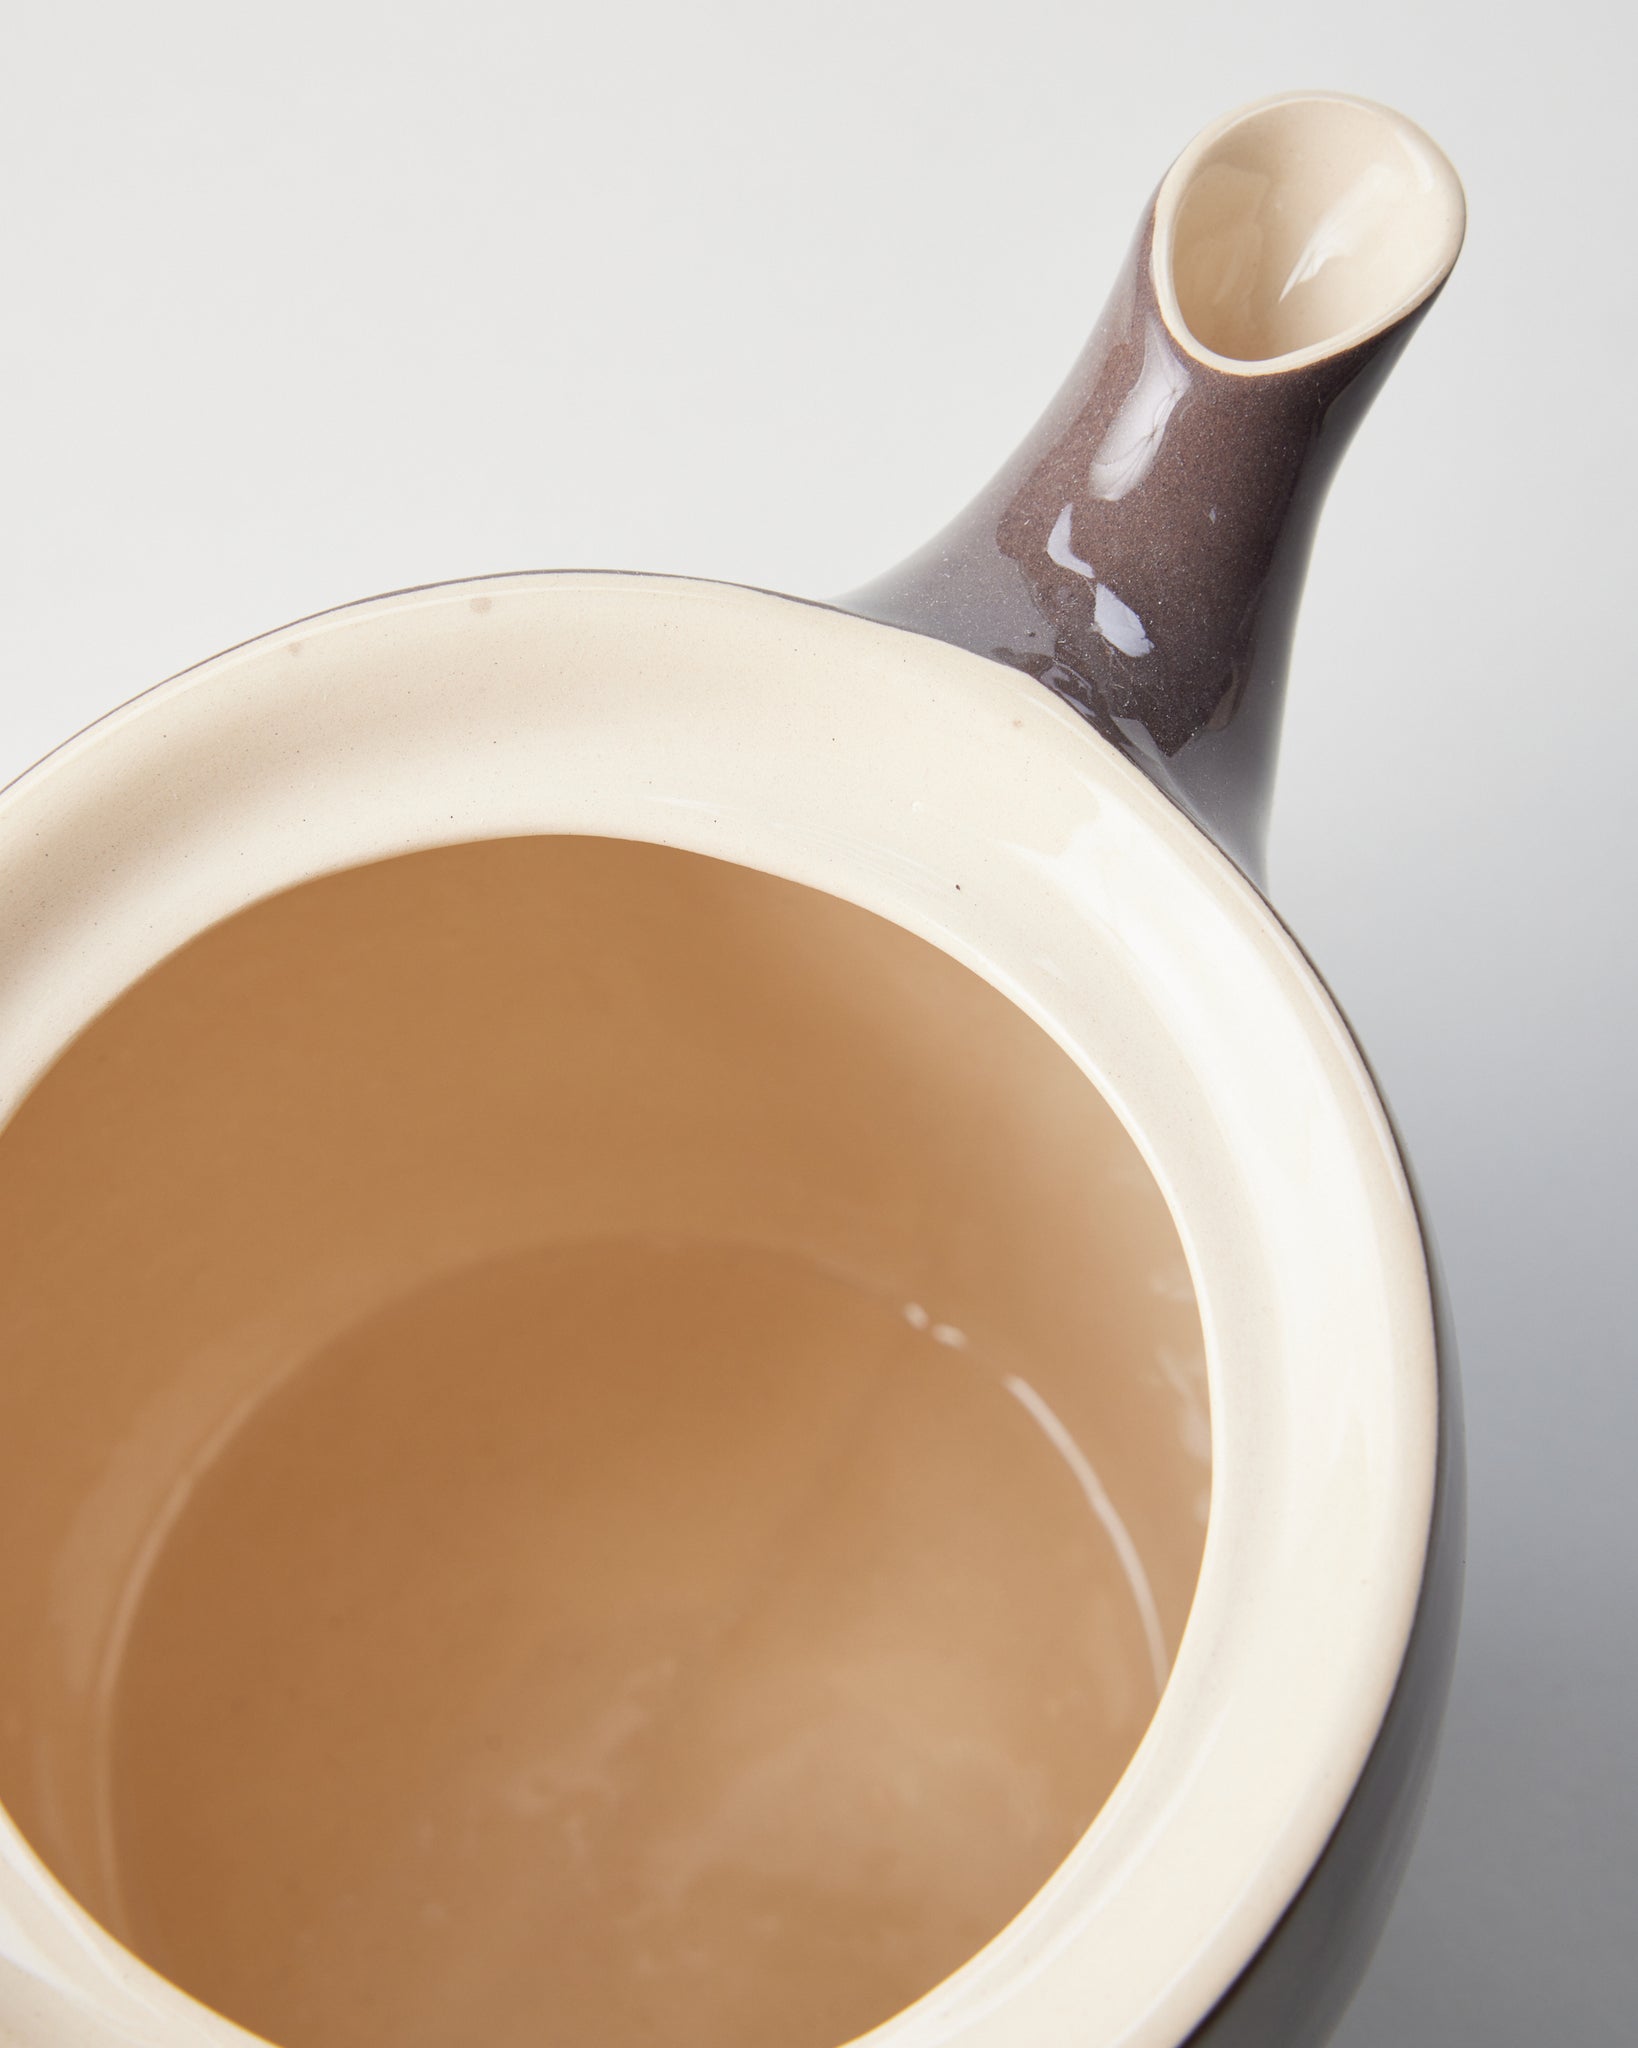 Tea Pot in Cocoa